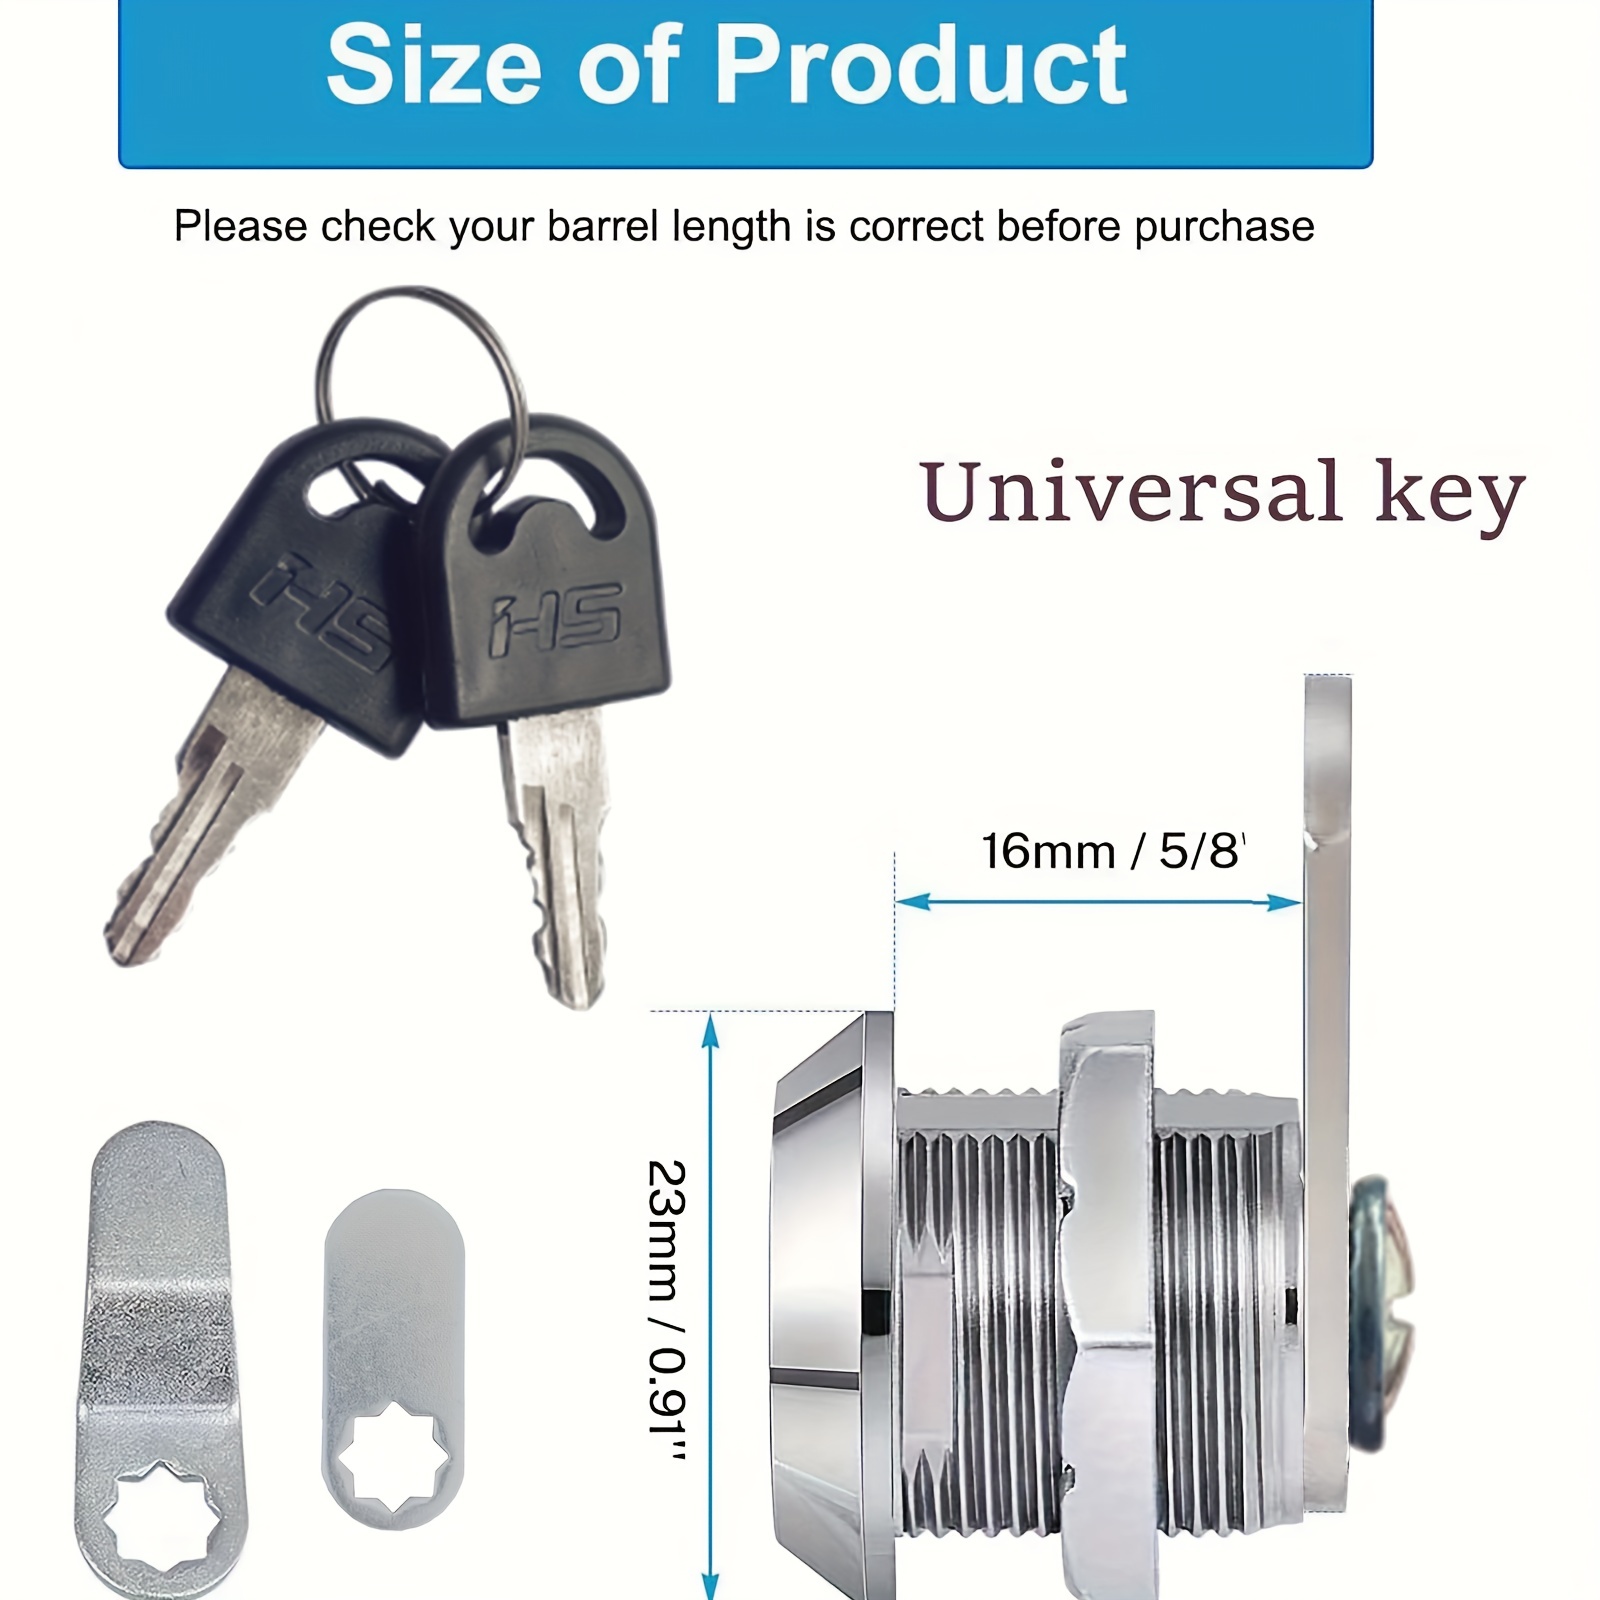 Cabinet Locks with Keys, 5/8 Cabinet Lock with Key, Drawer Locks